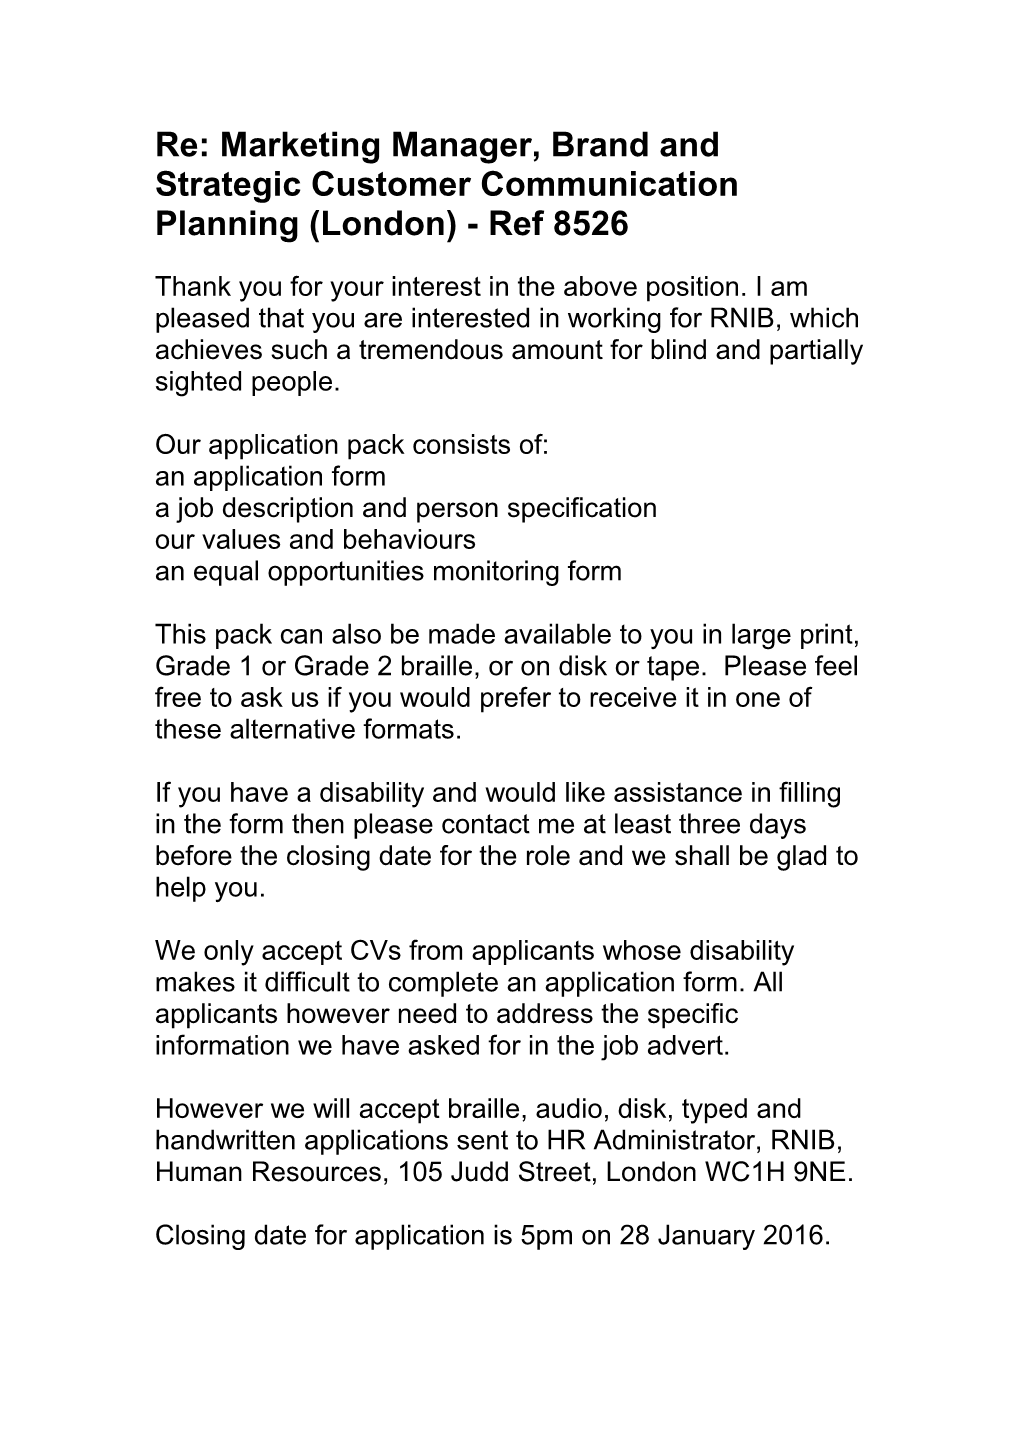 Re: Marketing Manager, Brand and Strategic Customer Communication Planning (London)- Ref 8526